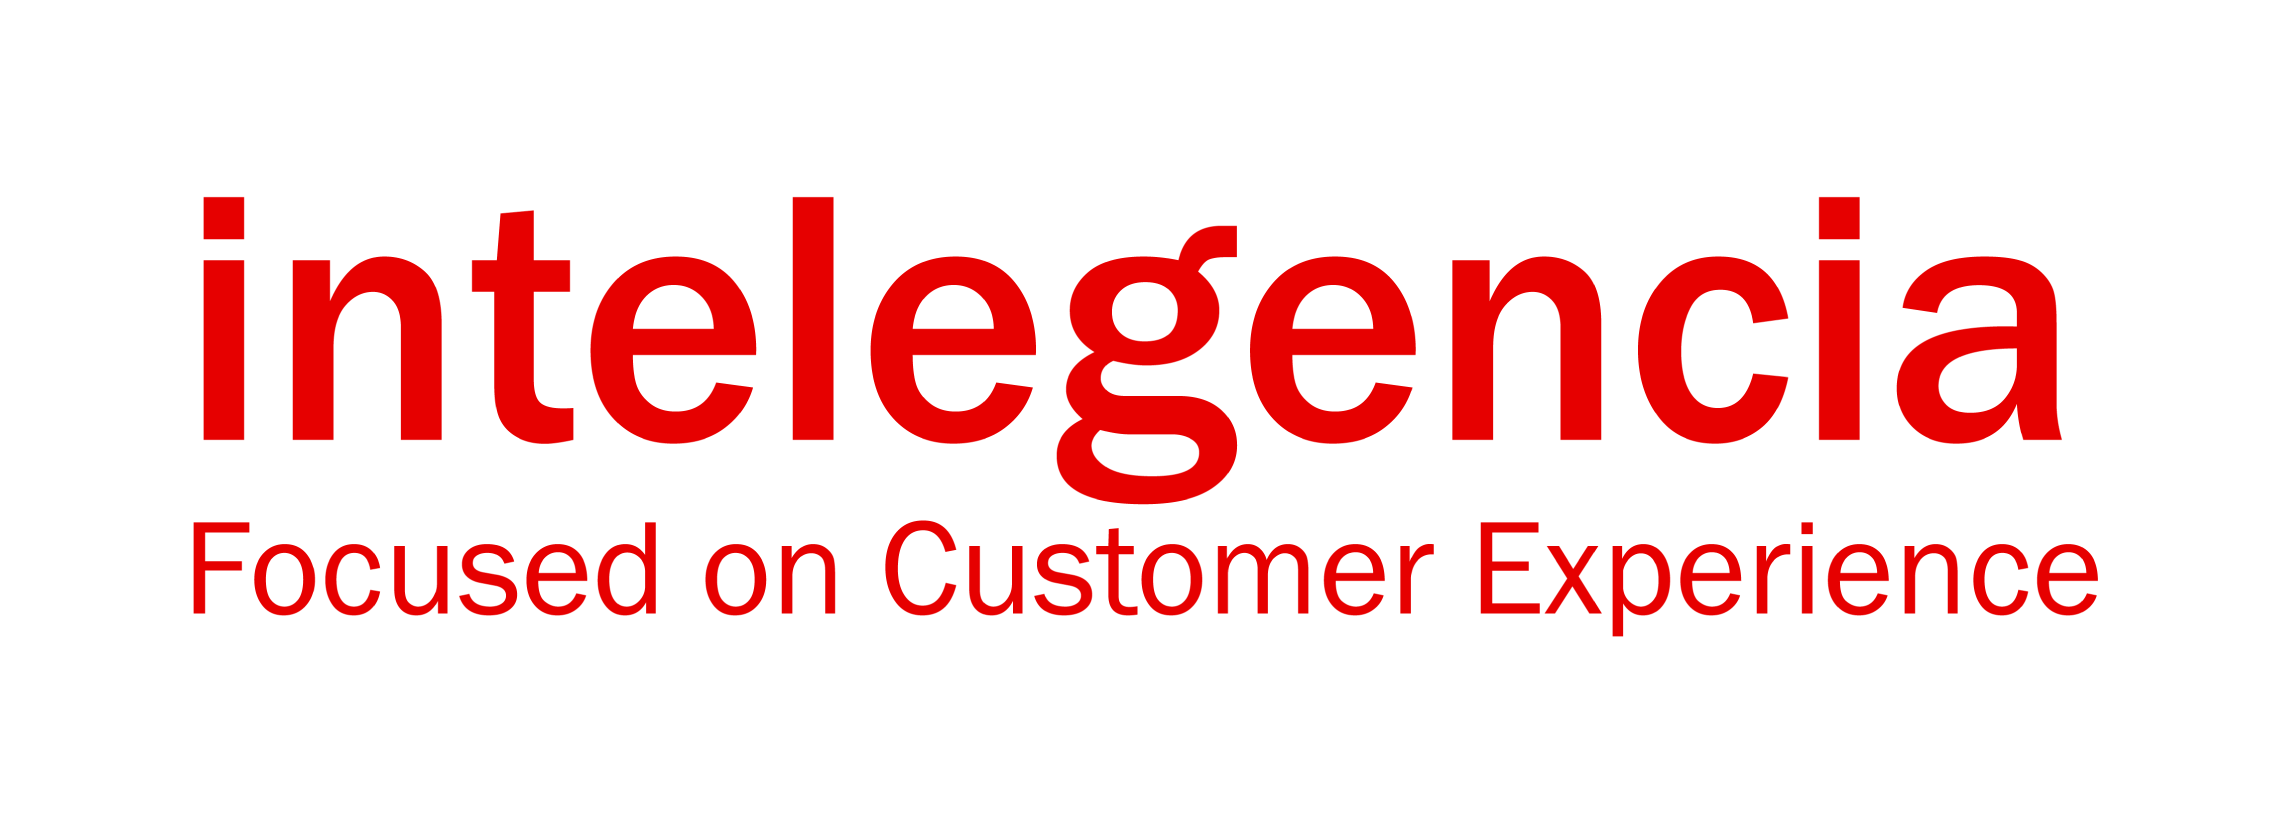 Partner with Intelegencia - Walmart.com solution provider page